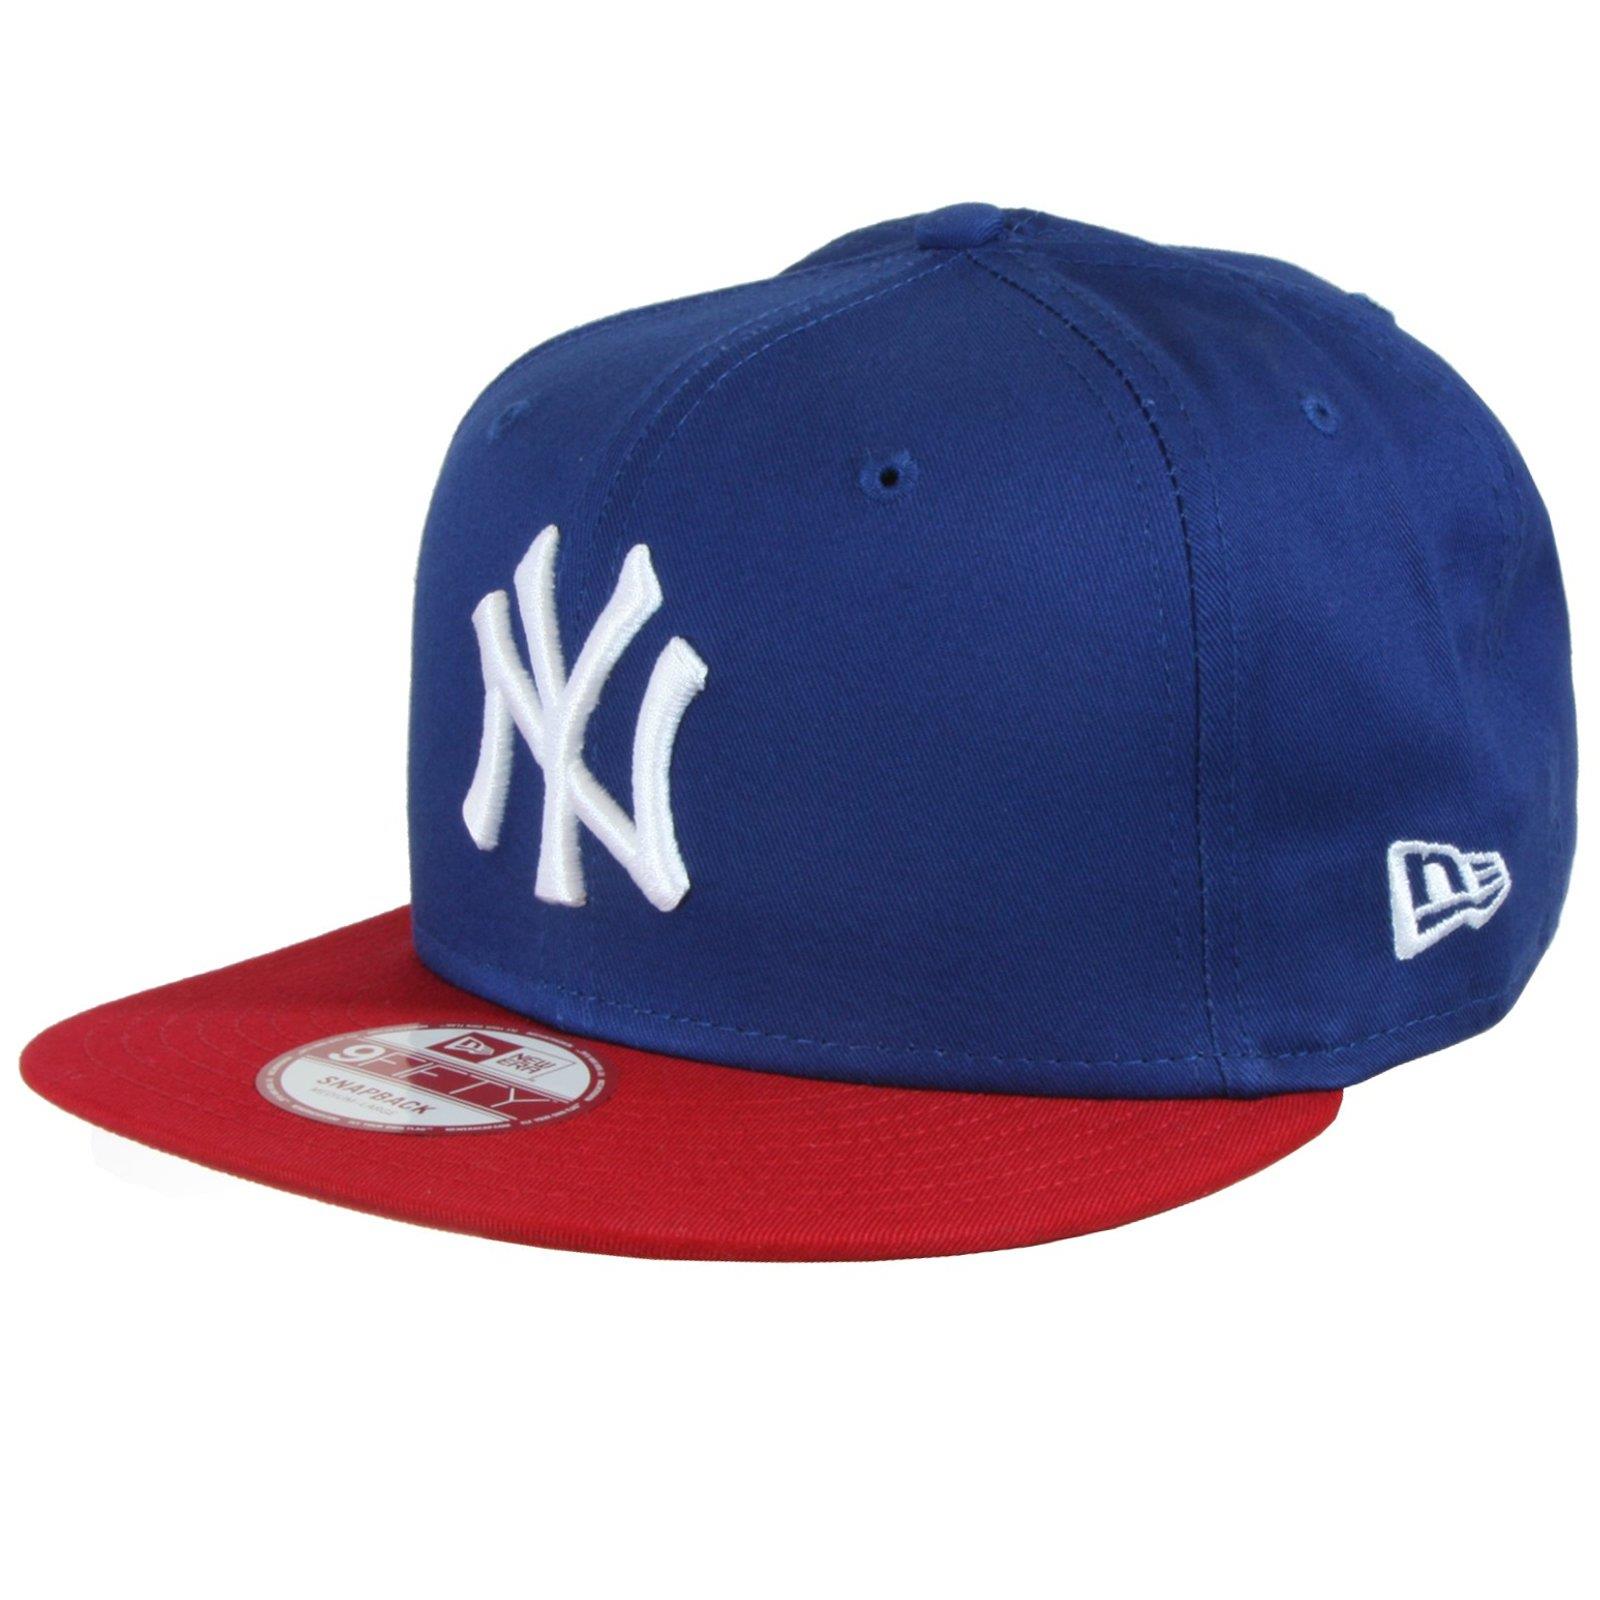 New Era Baseball Snapback Cap Schirm Mütze Trucker Kappe NY Yankees Dodgers